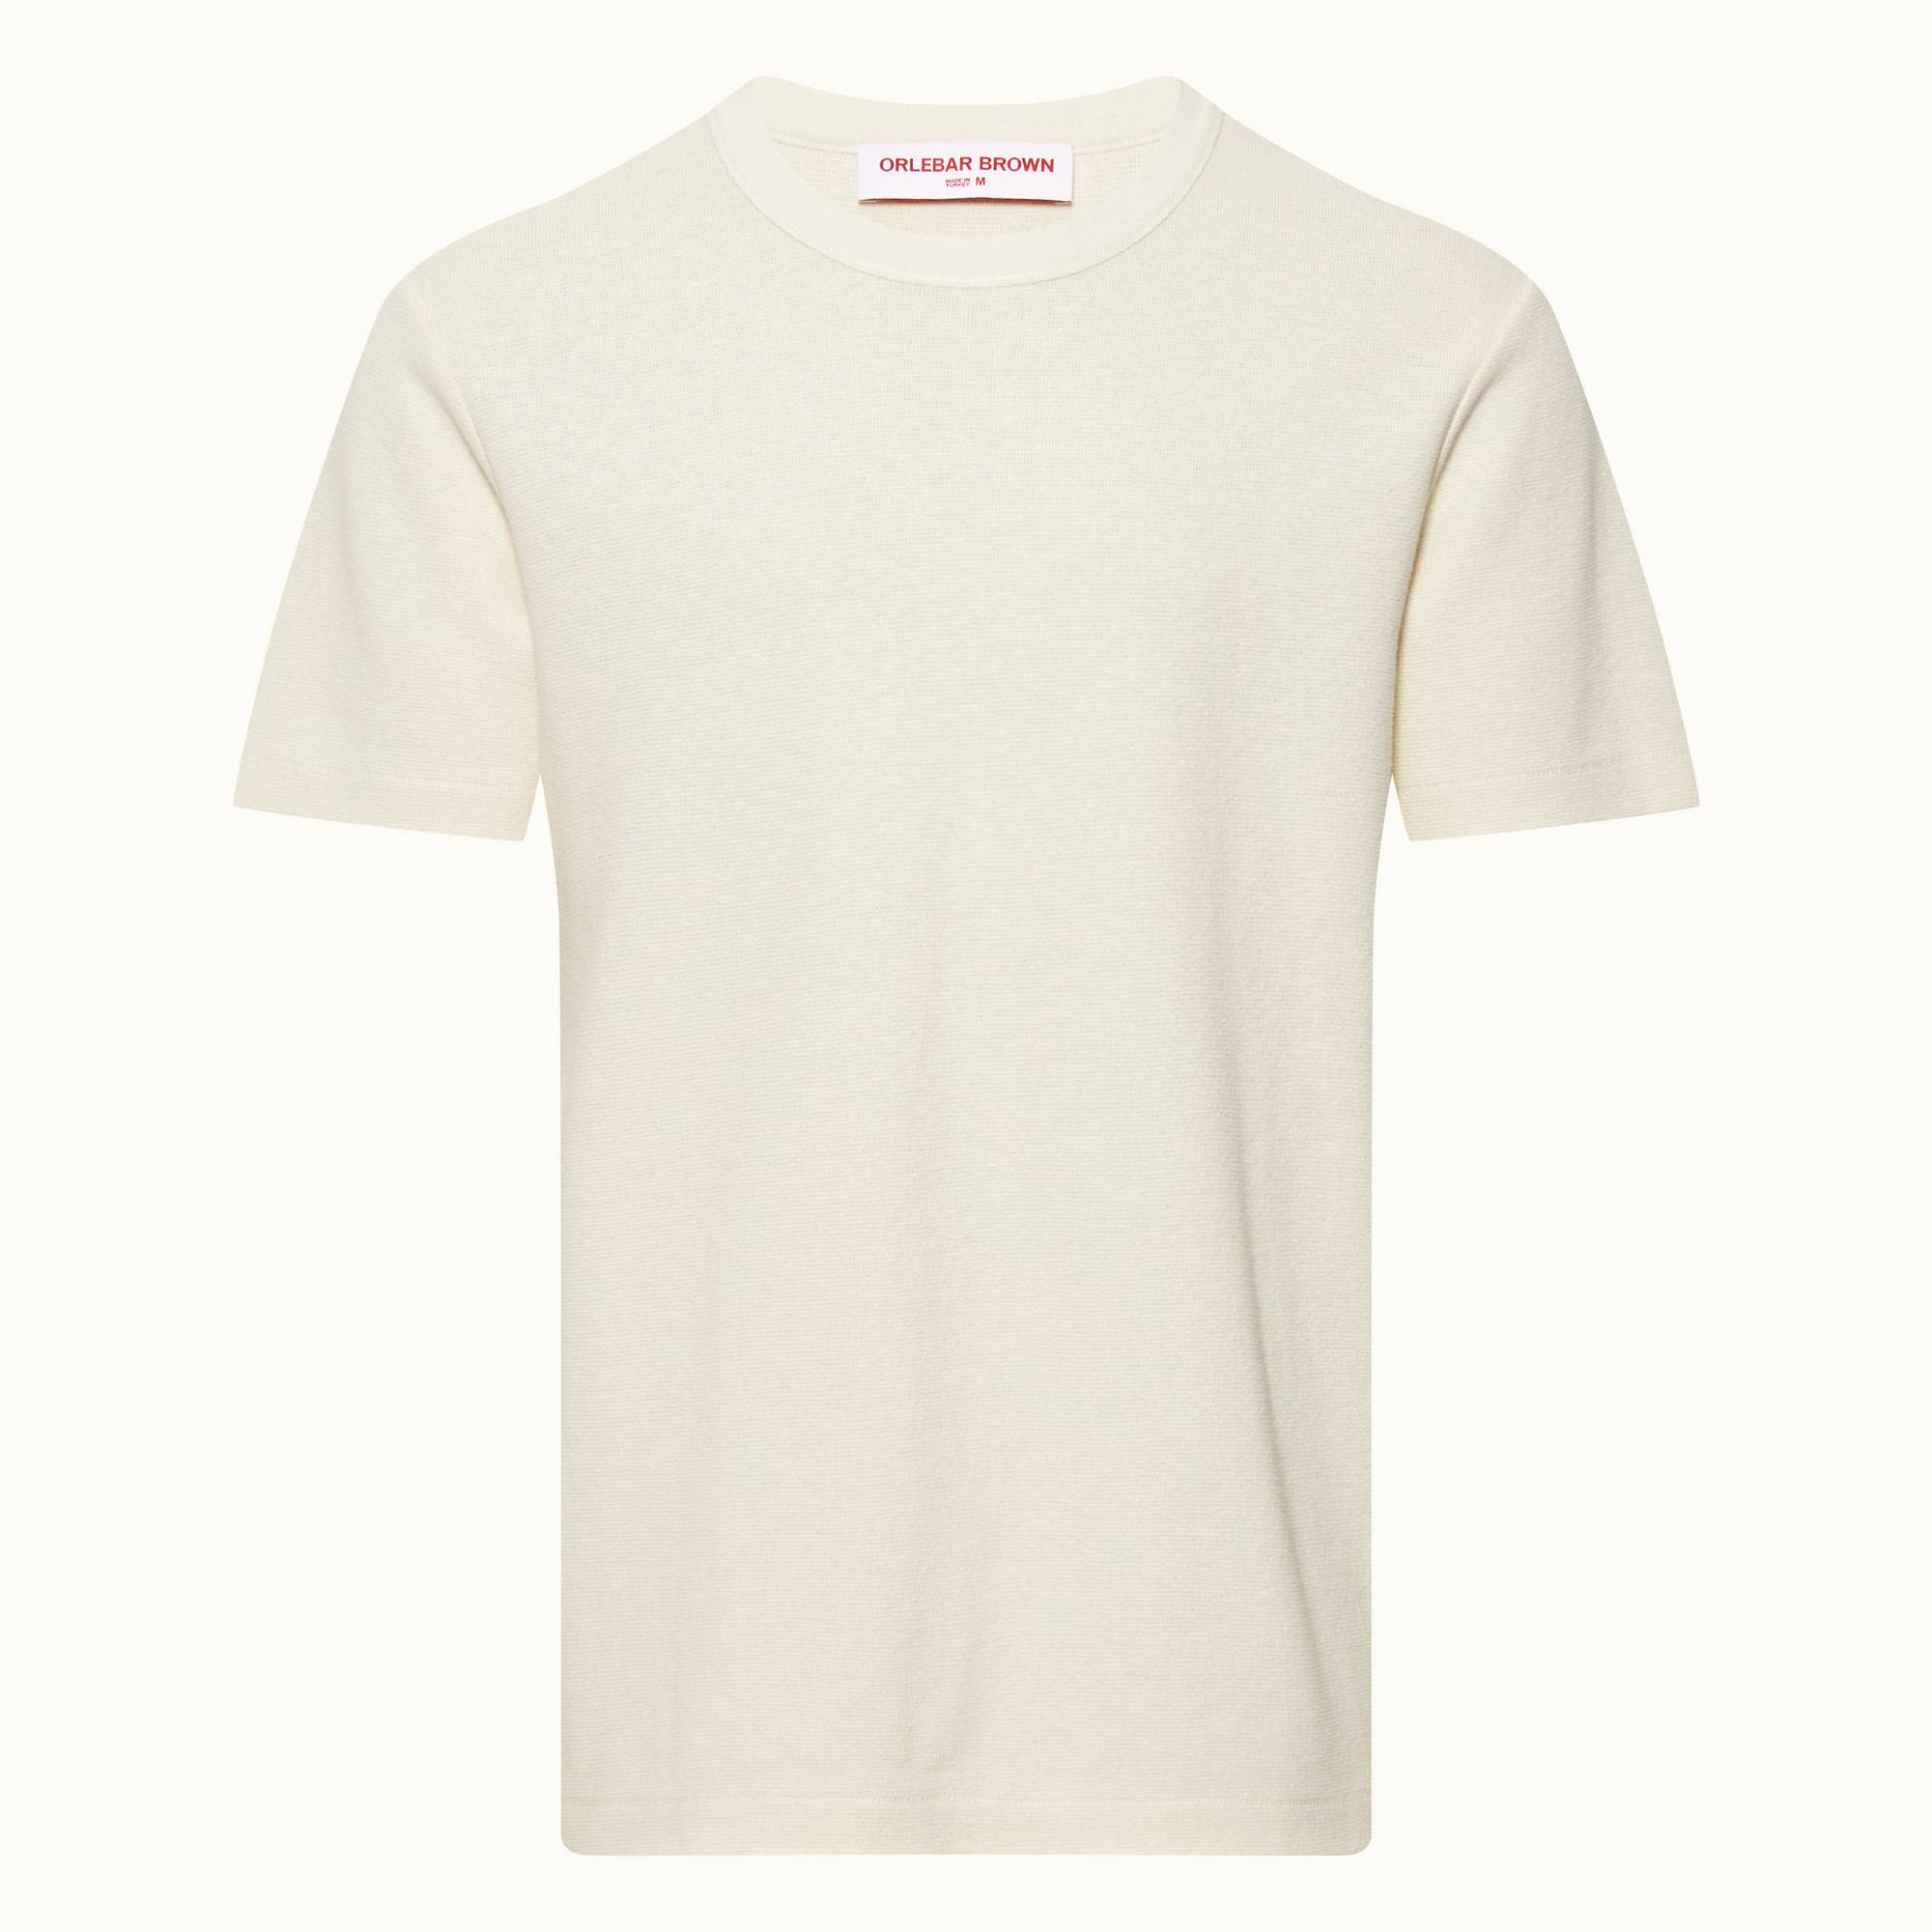 Nicolas Chainstitch - Mens Sea Mist Tonal Chainstitch Relaxed Fit Cotton-Linen T-shirt